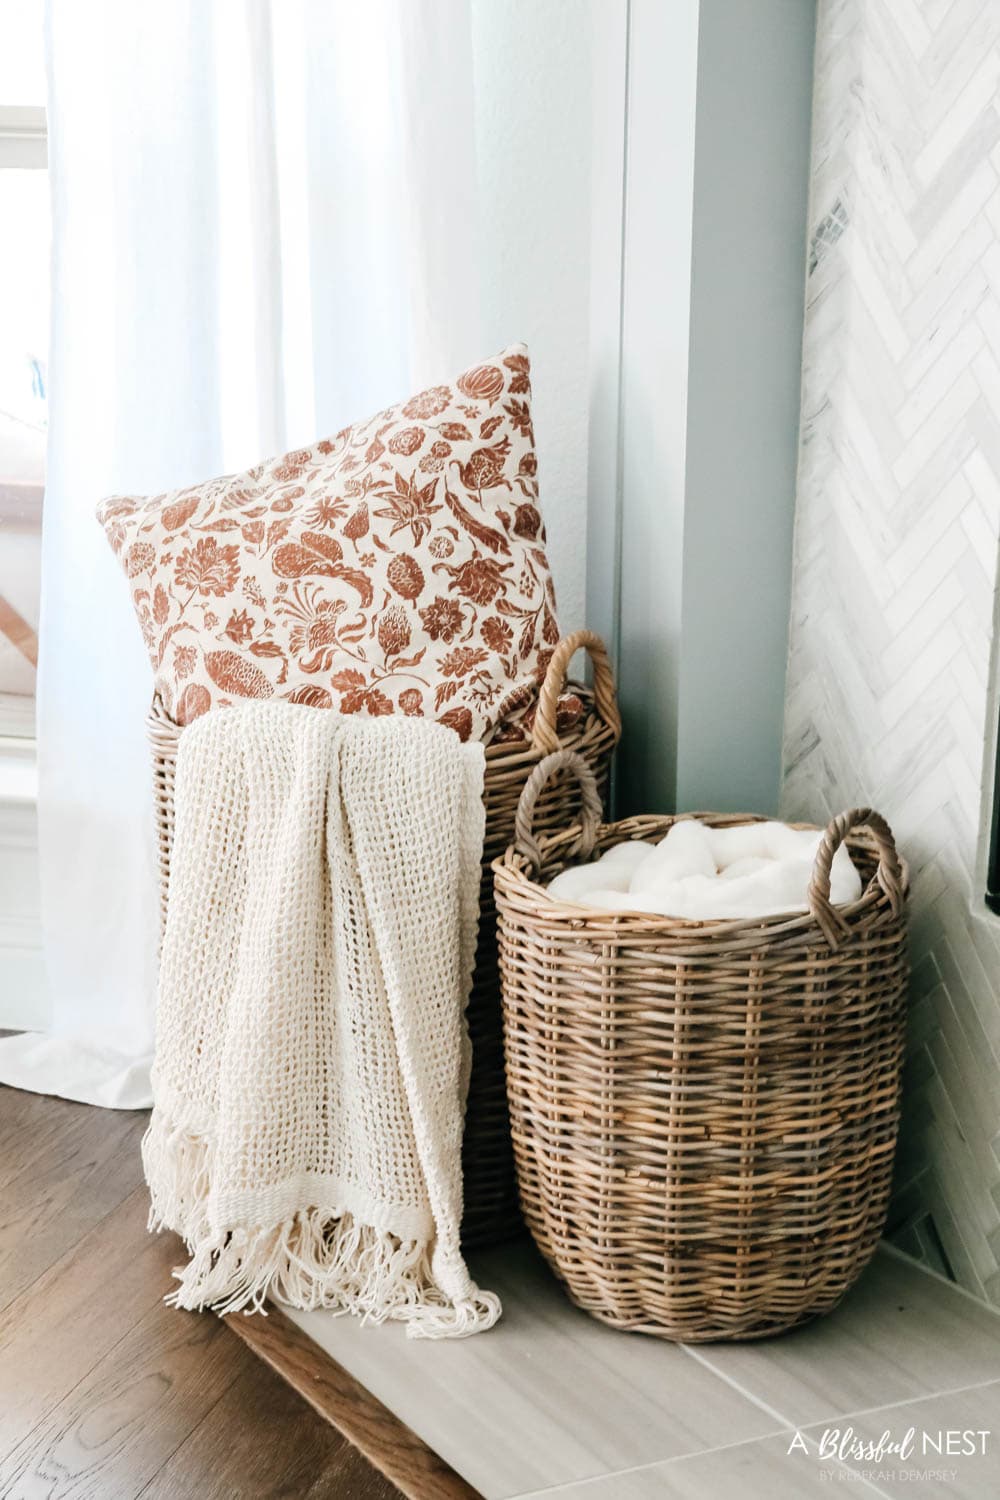 Cozy pillows, plush blankets, fall florals, fall decor. #ABlissfulNest #falldecor #falllivingroom